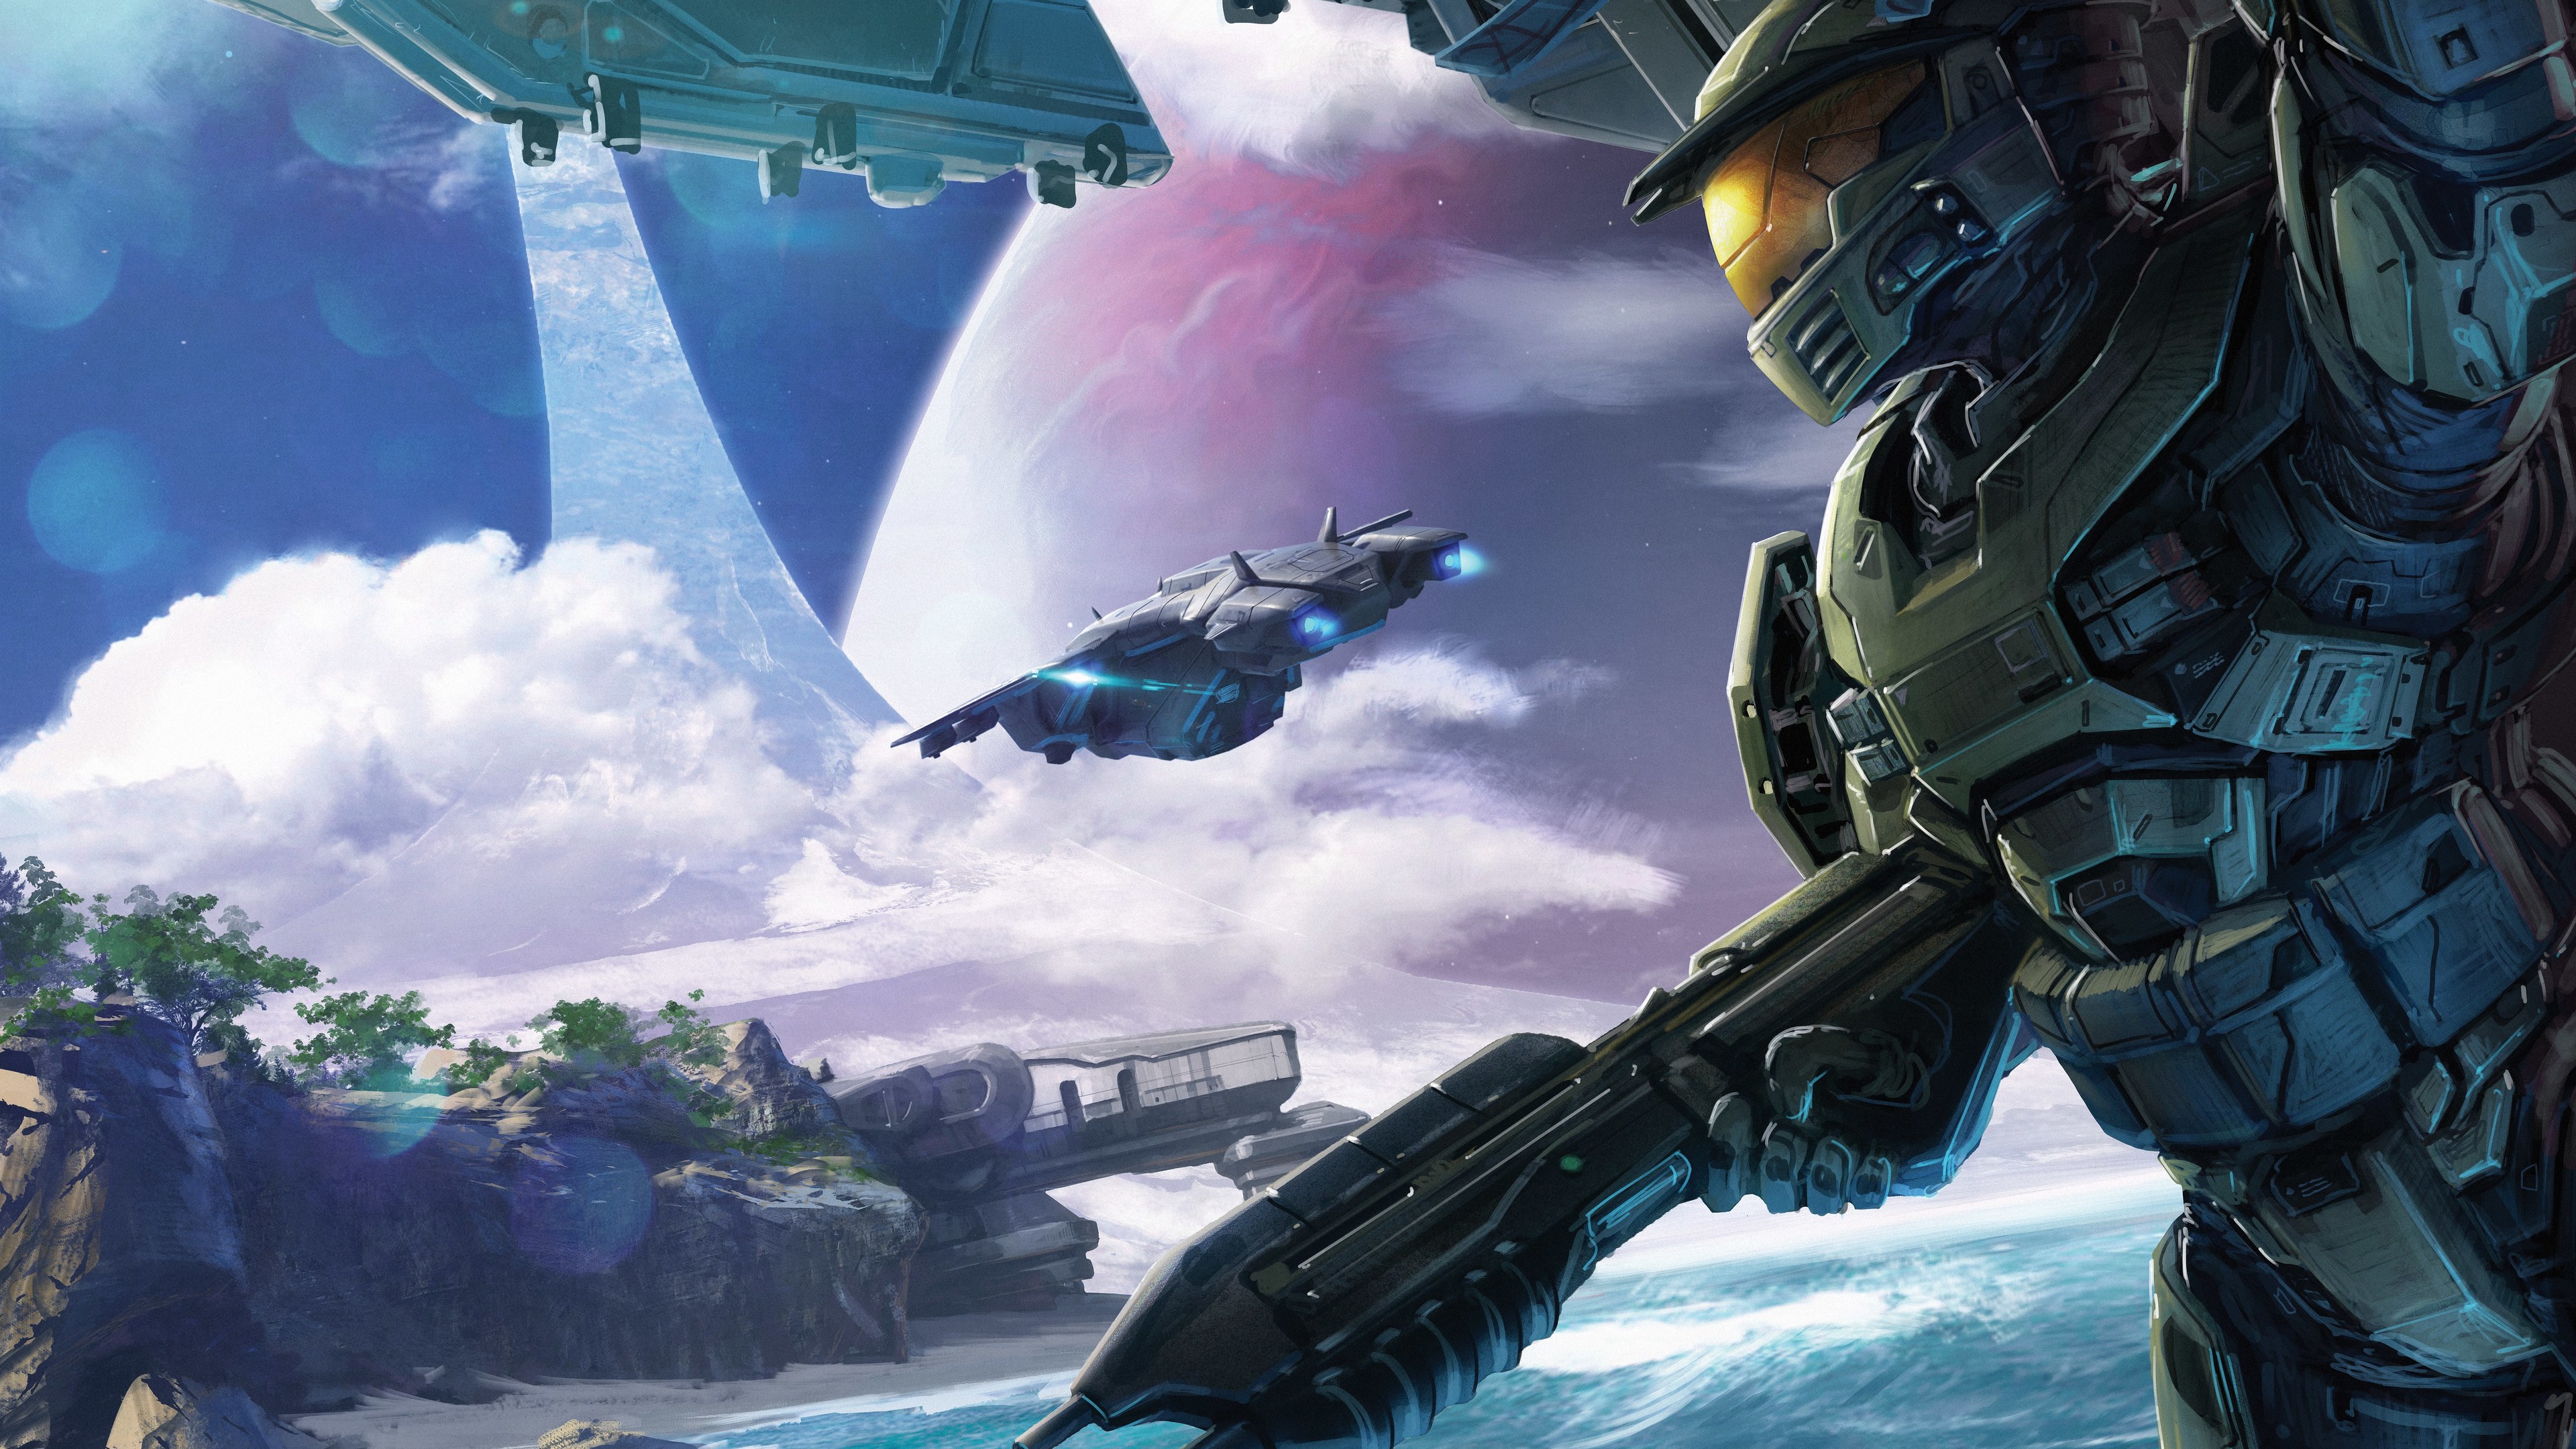 Master Chief Halo Halo CE Spaceship Futuristic Armor Futuristic Digital Art Video Games Clouds Armor 3840x2160